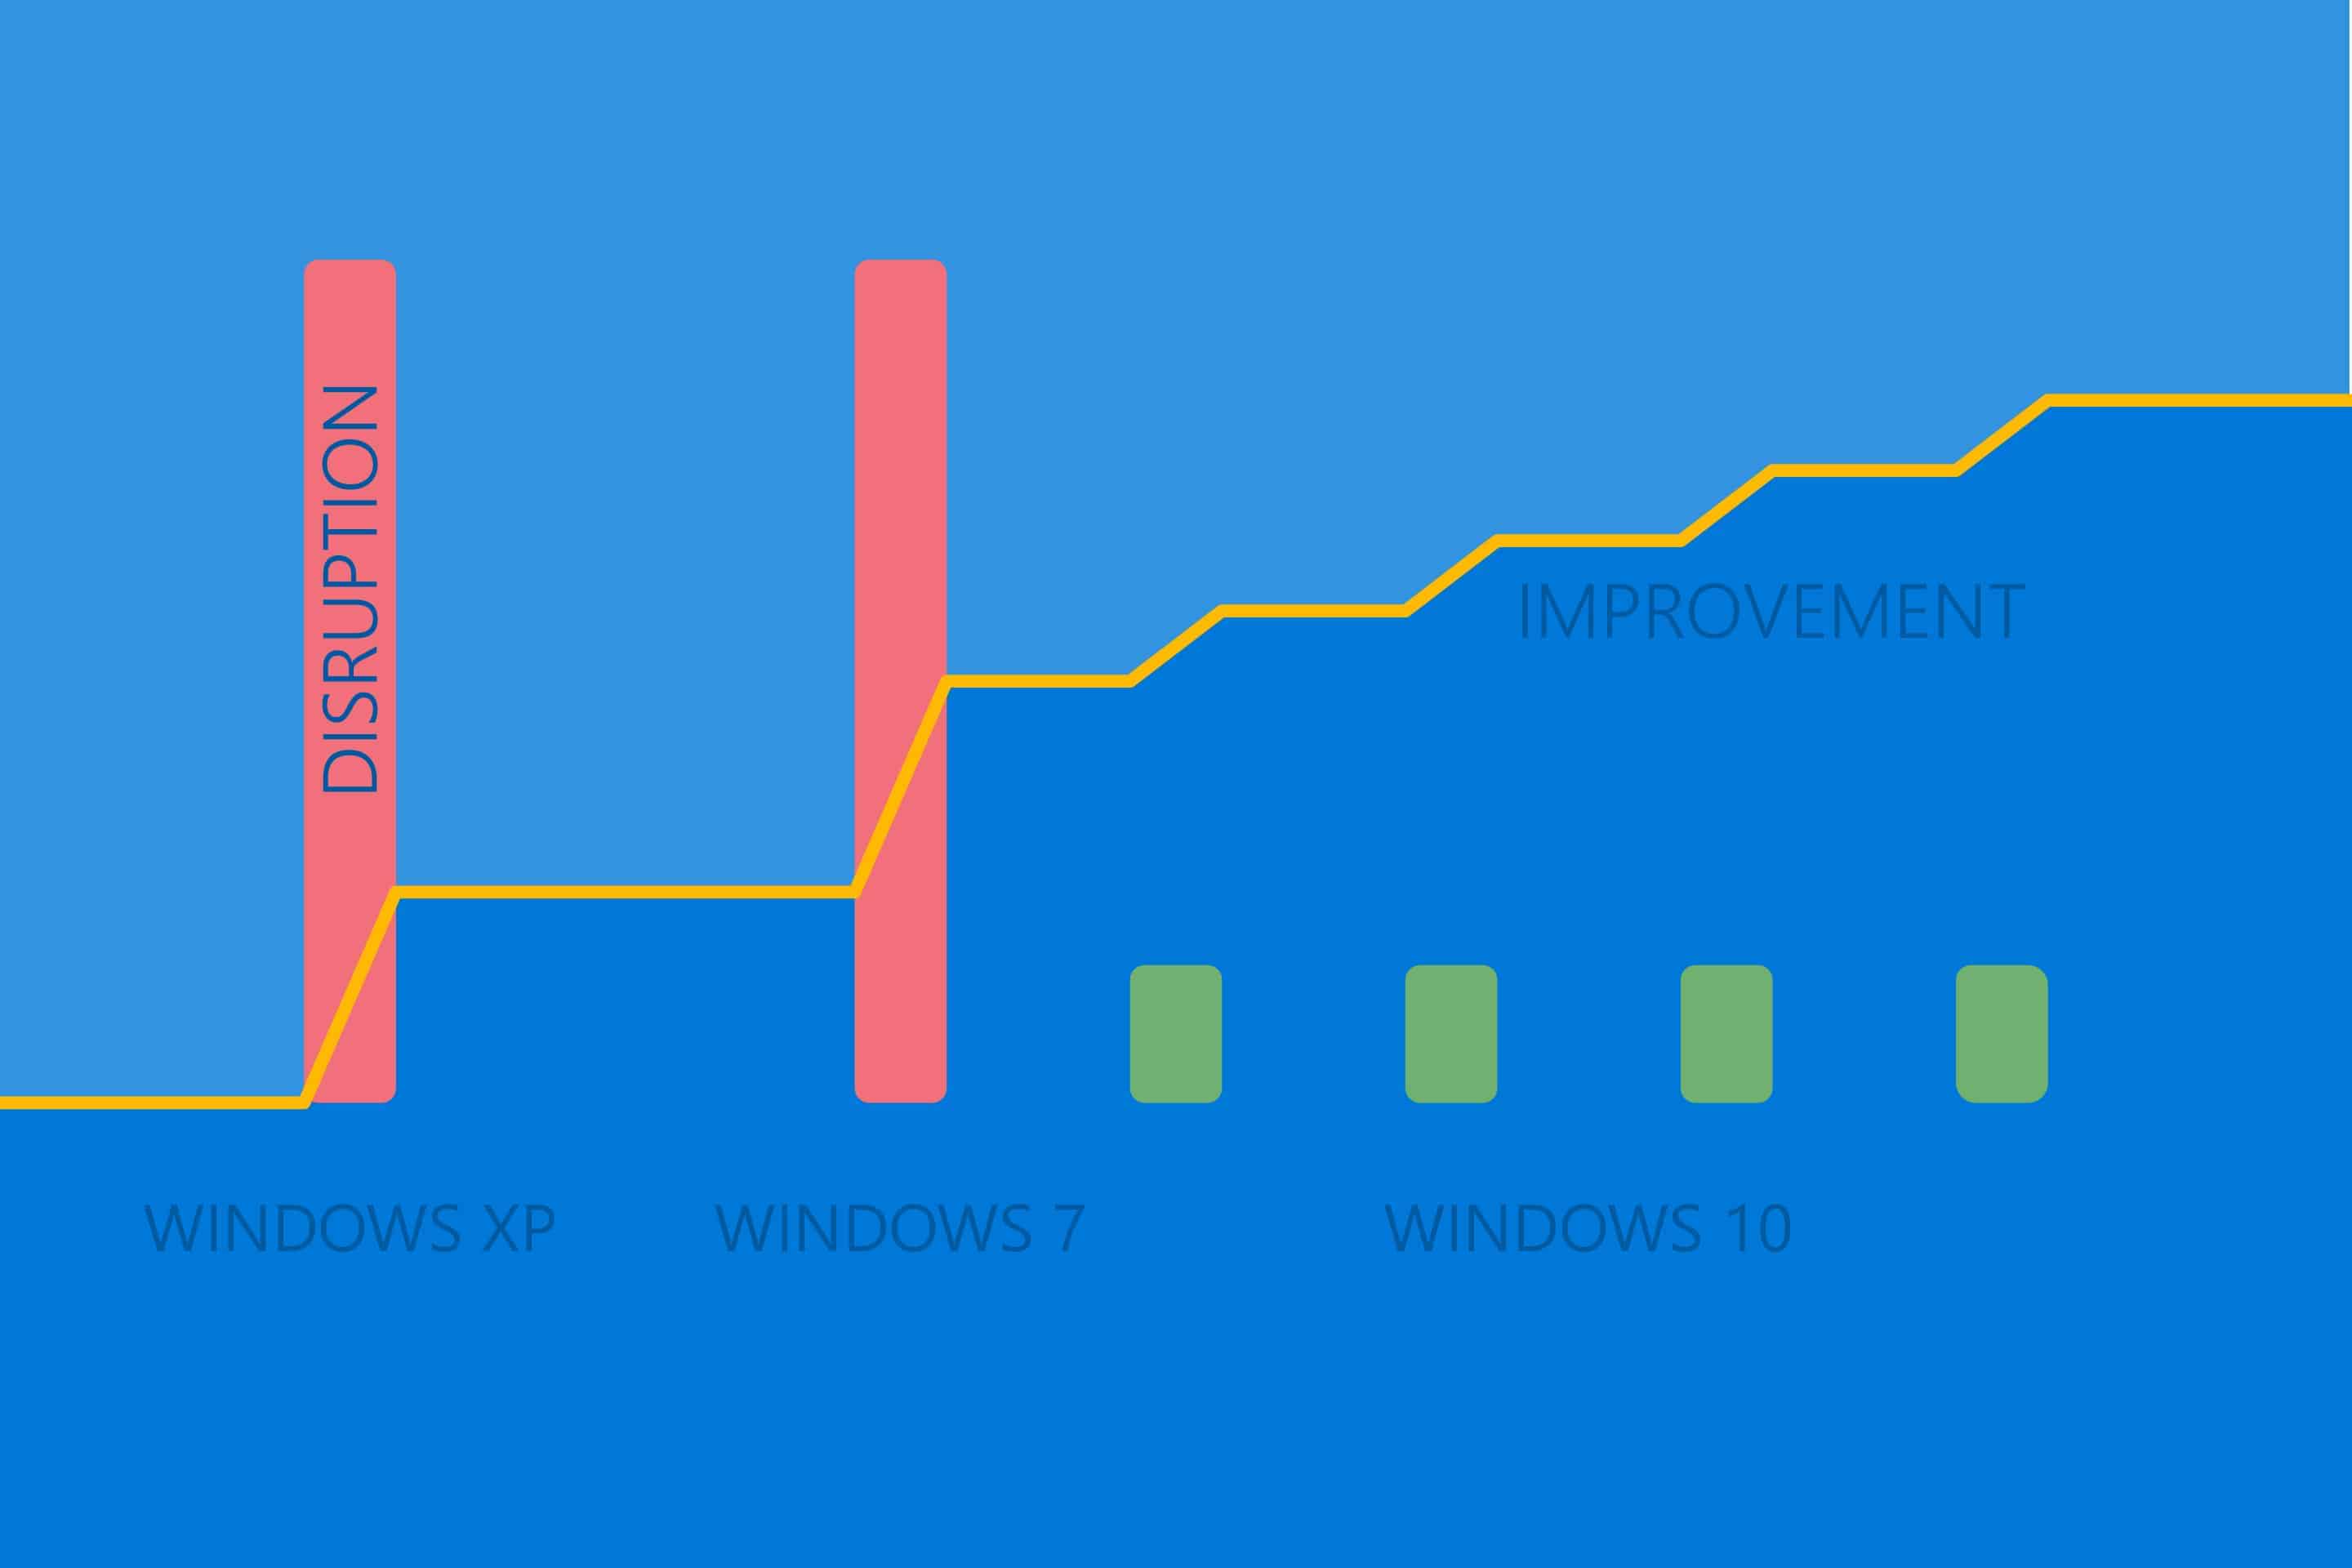 Windows as a service explainer